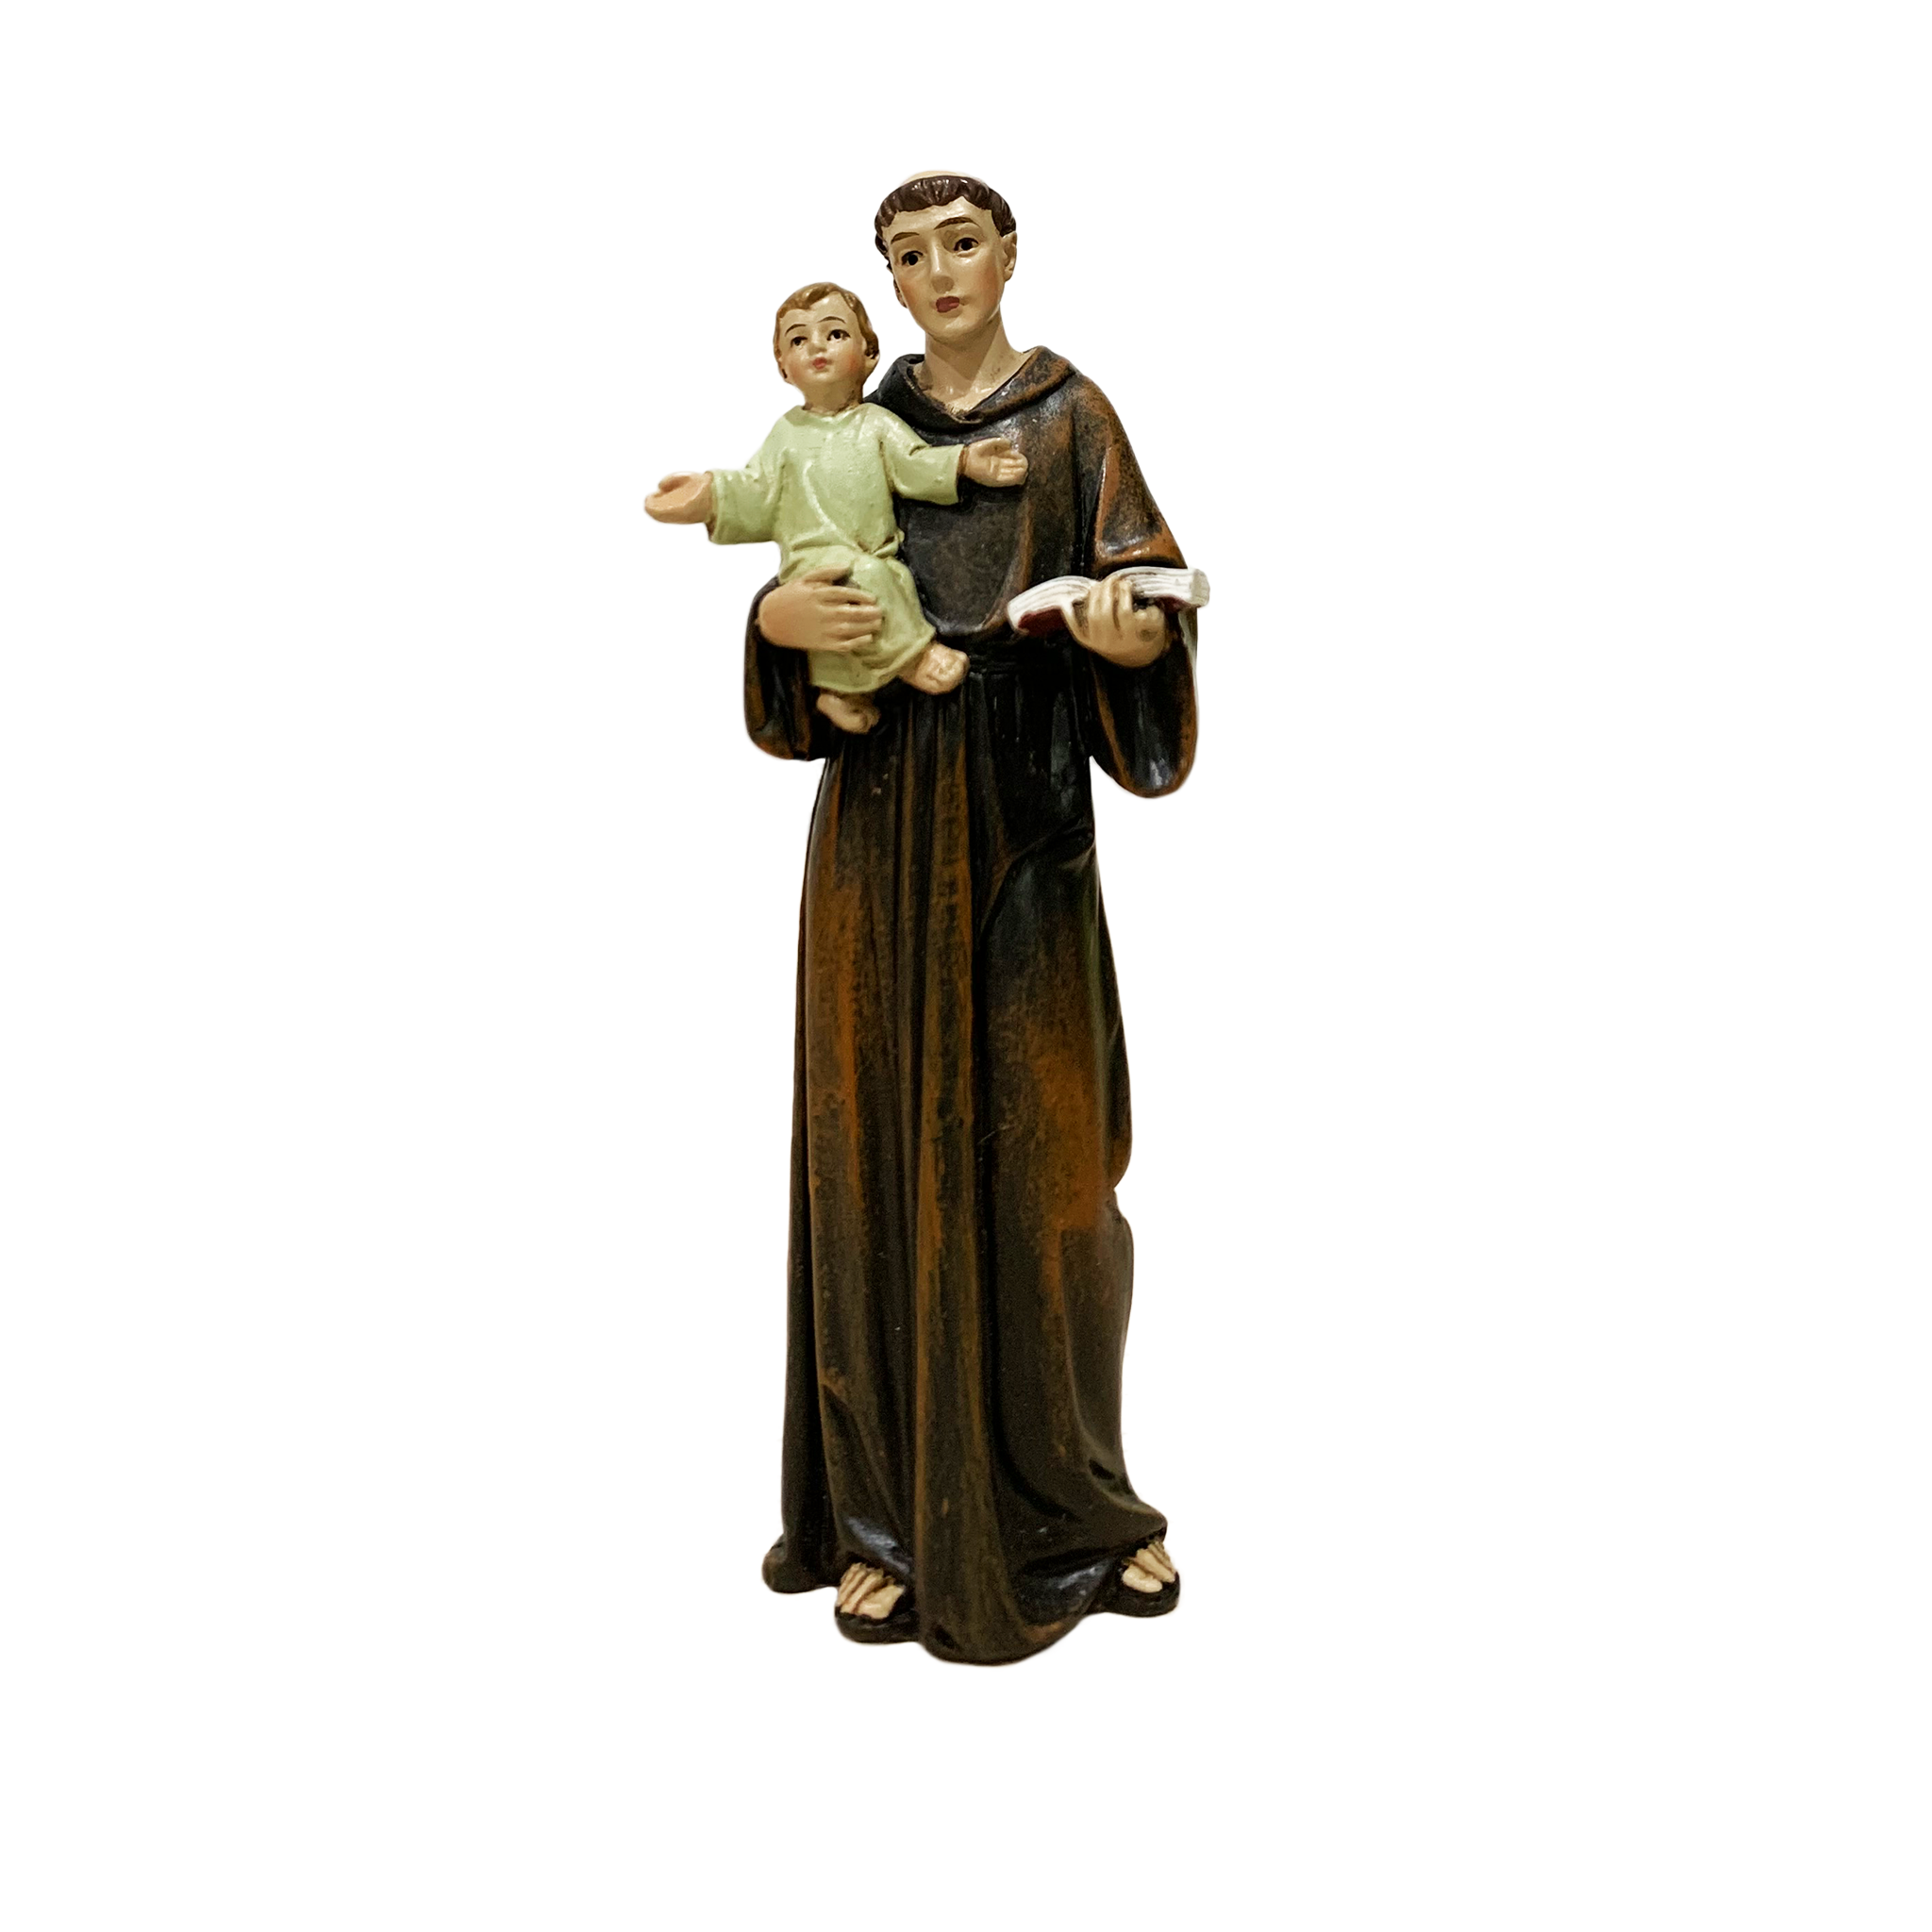 Saint Anthony statue joseph studio renaissance collection